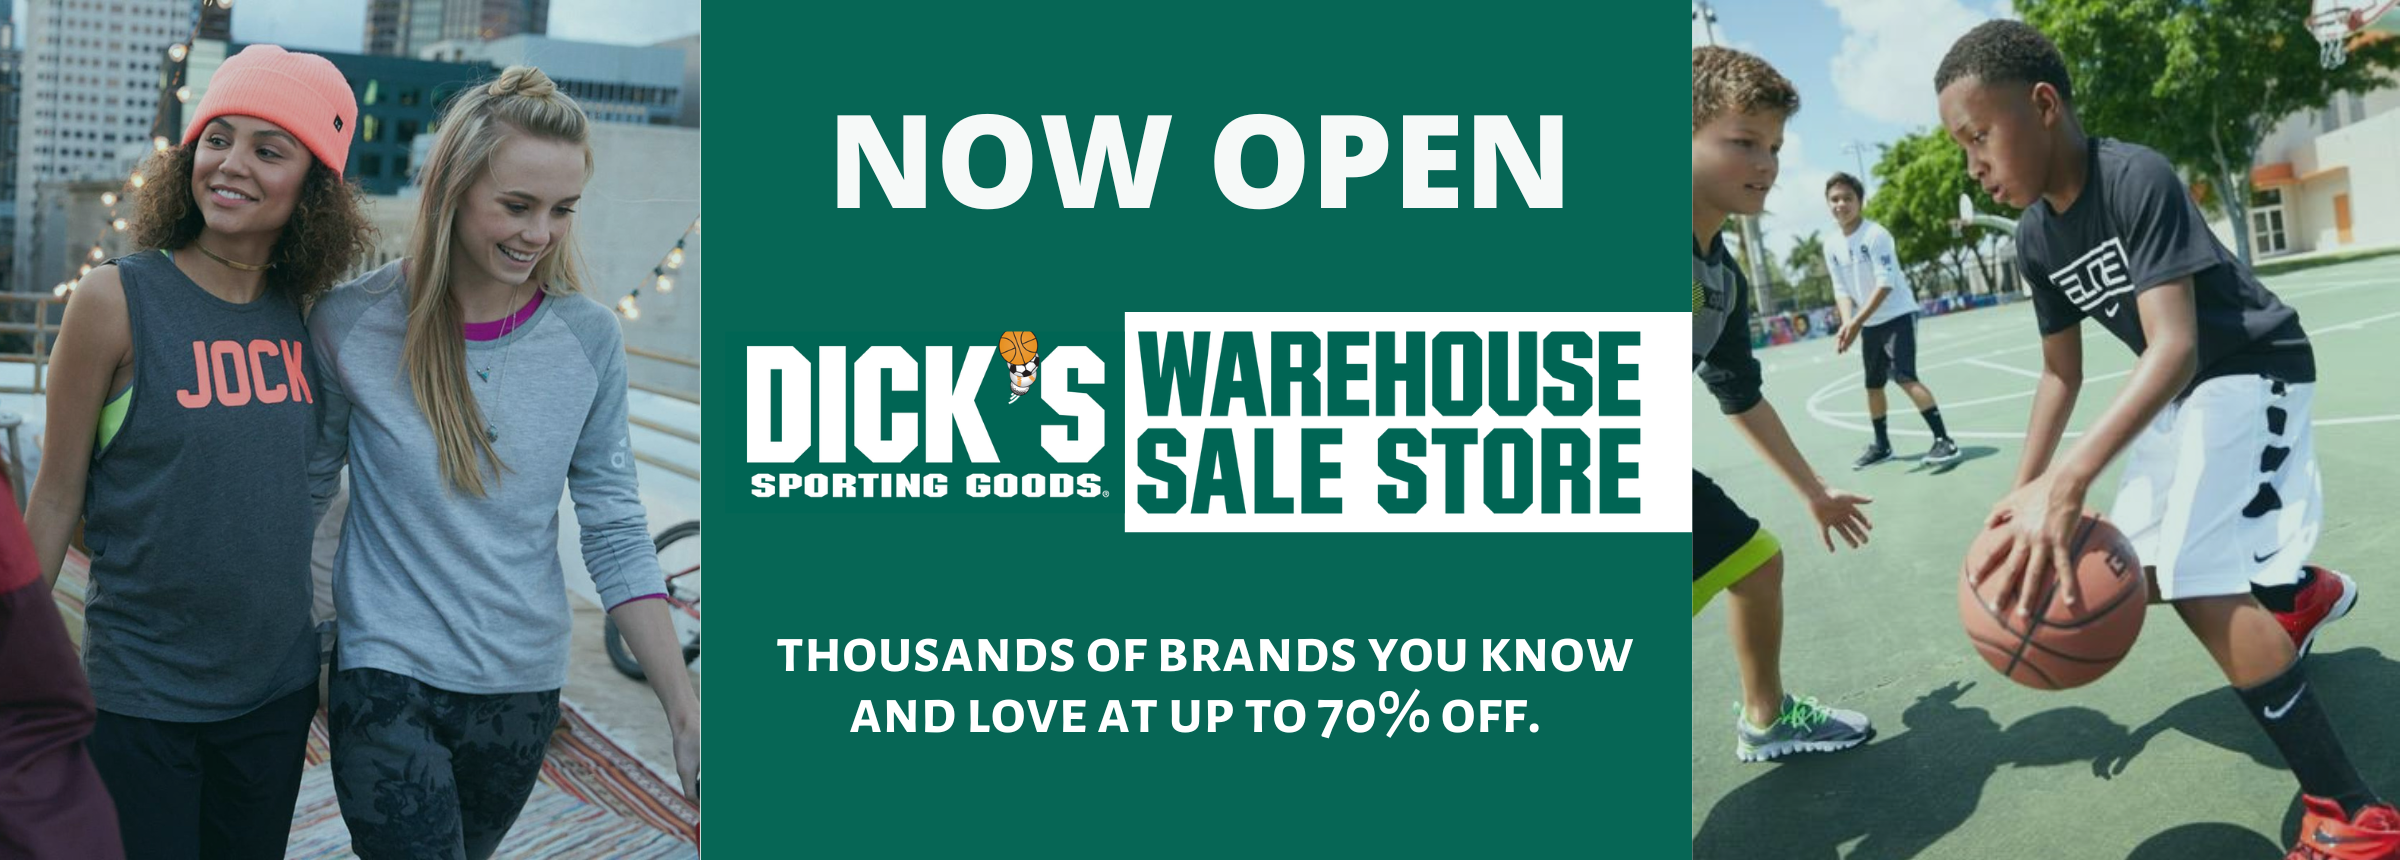 Dicks Warehouse Sale Store Banner Image 2